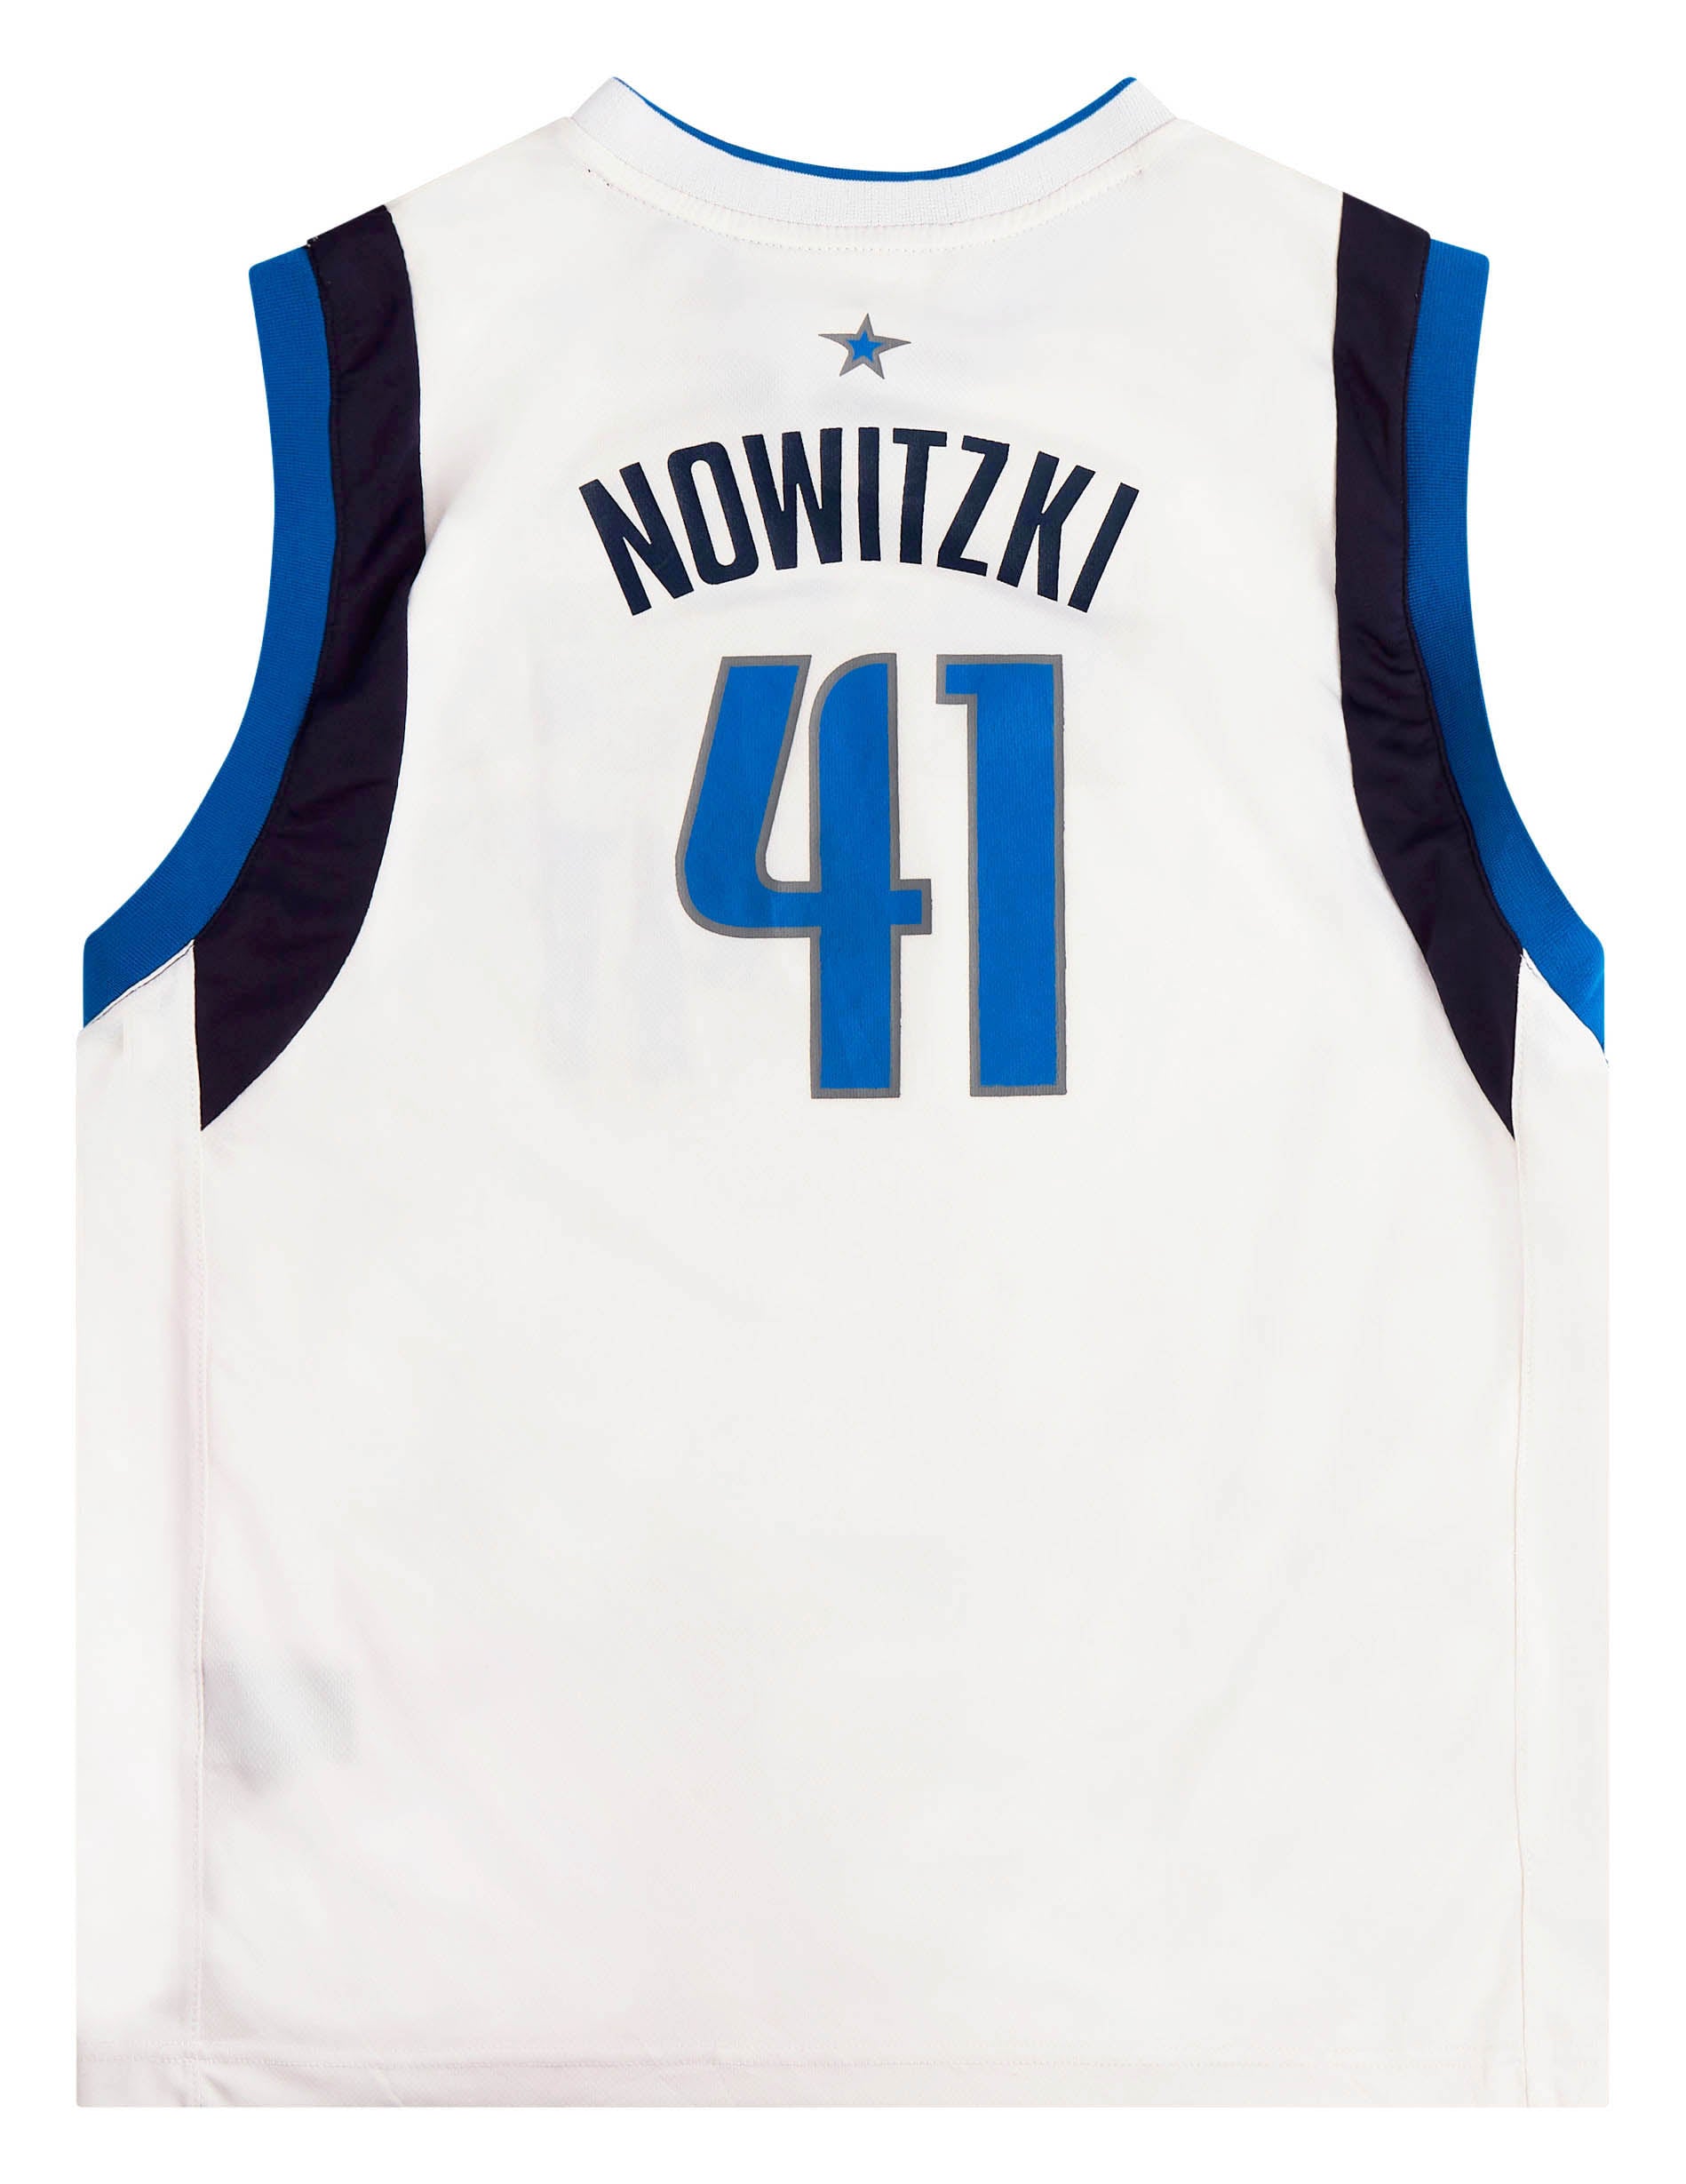 Dirk Nowitzki Dallas Mavericks Vintage Signature Shirt